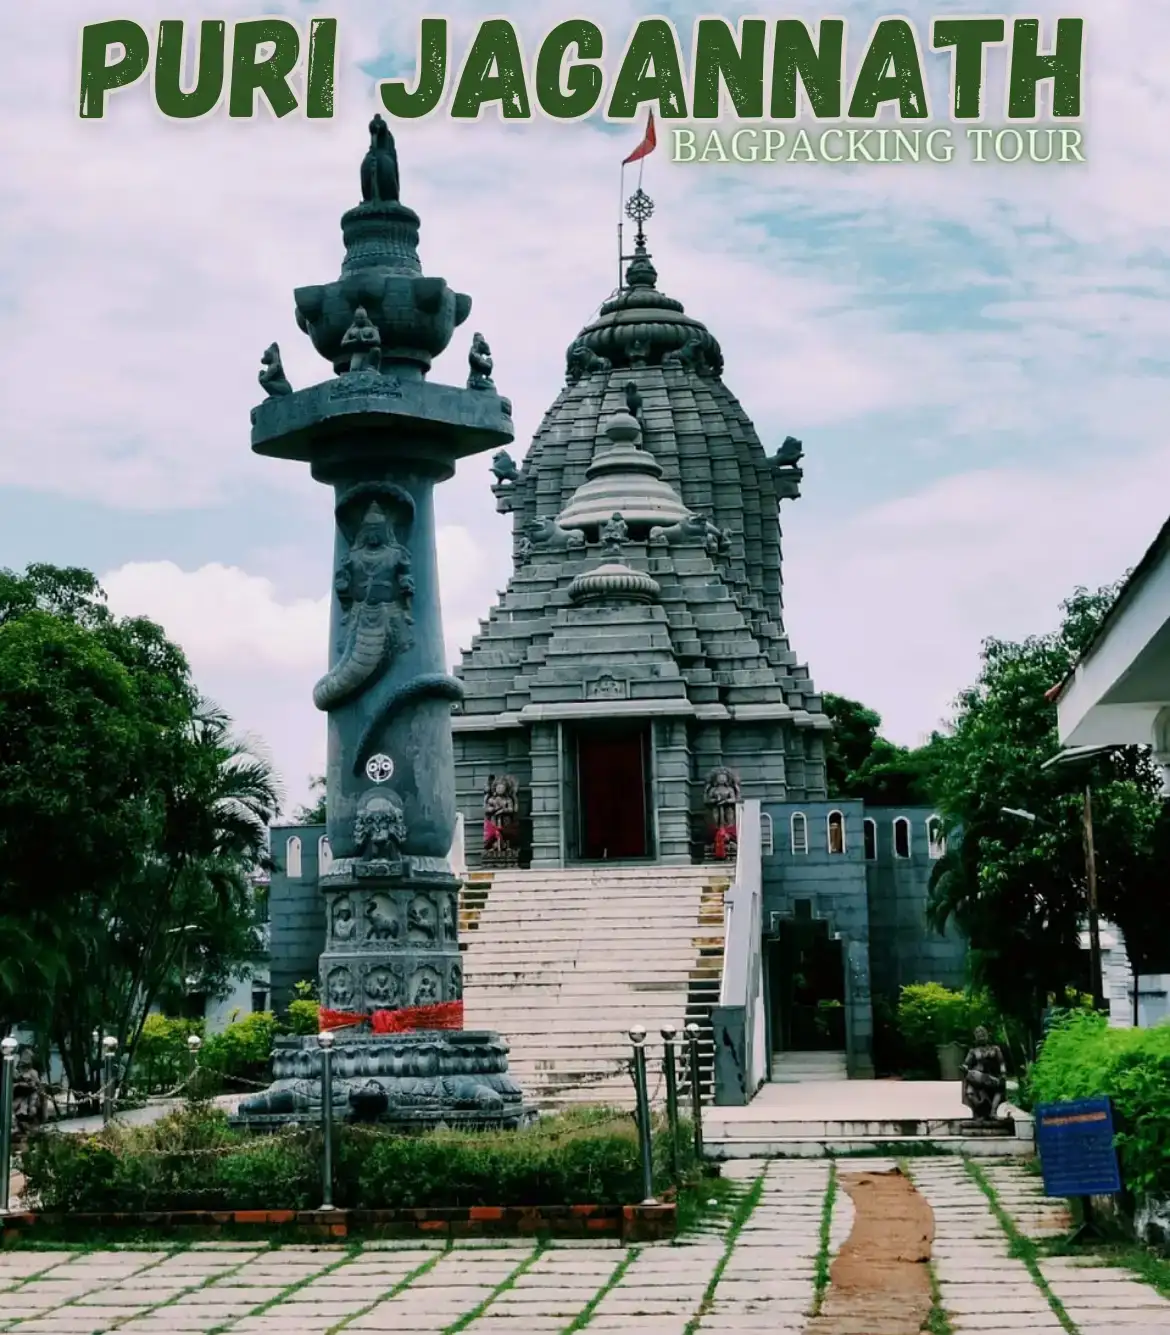 Puri Jagannath Tour Package from Bangalore